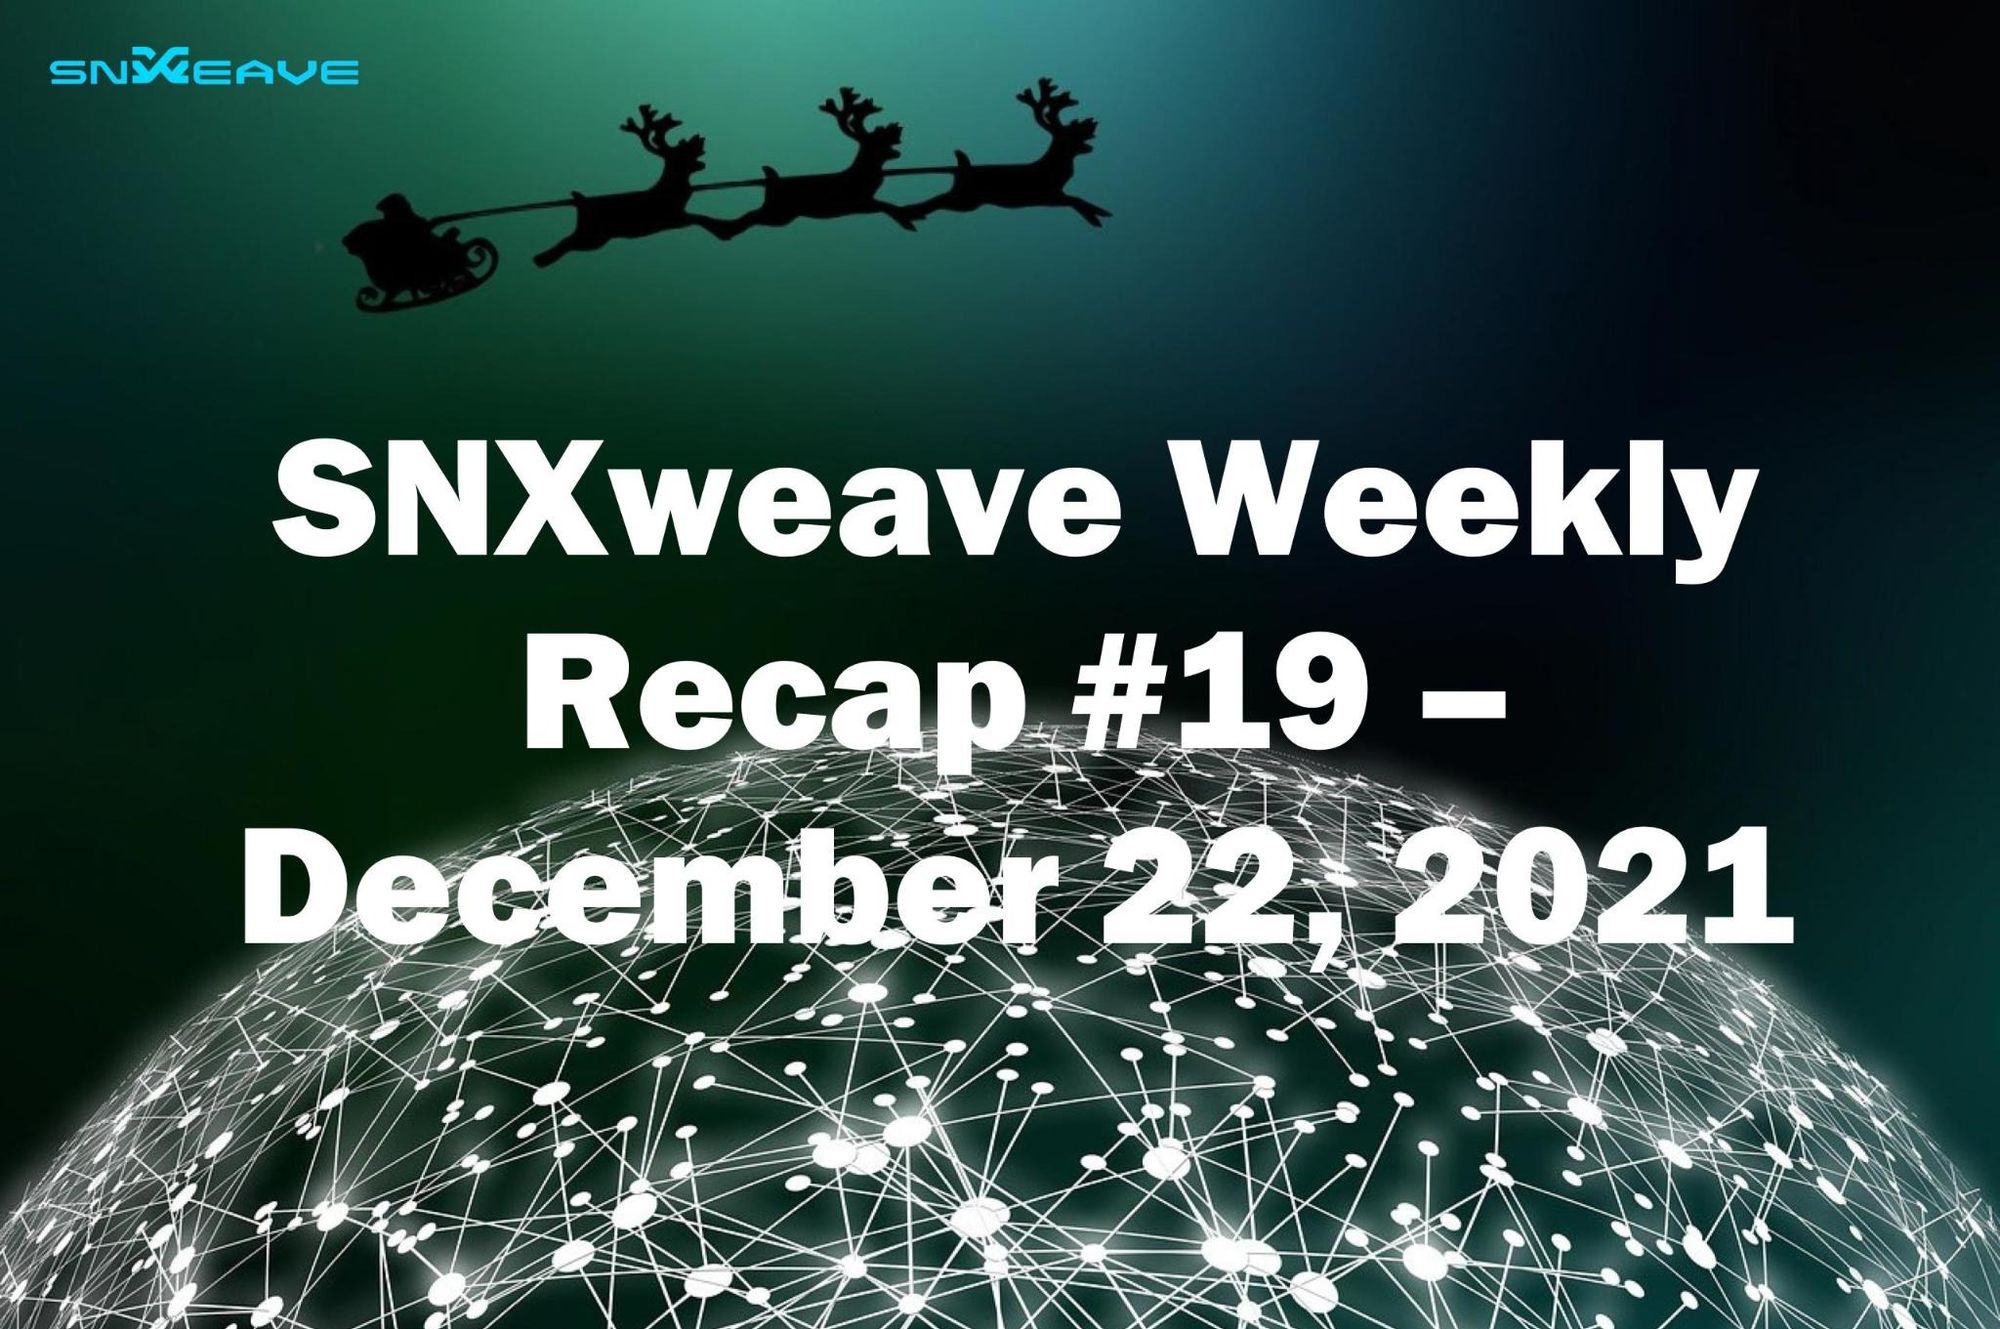 SNXweave Weekly Recap 19